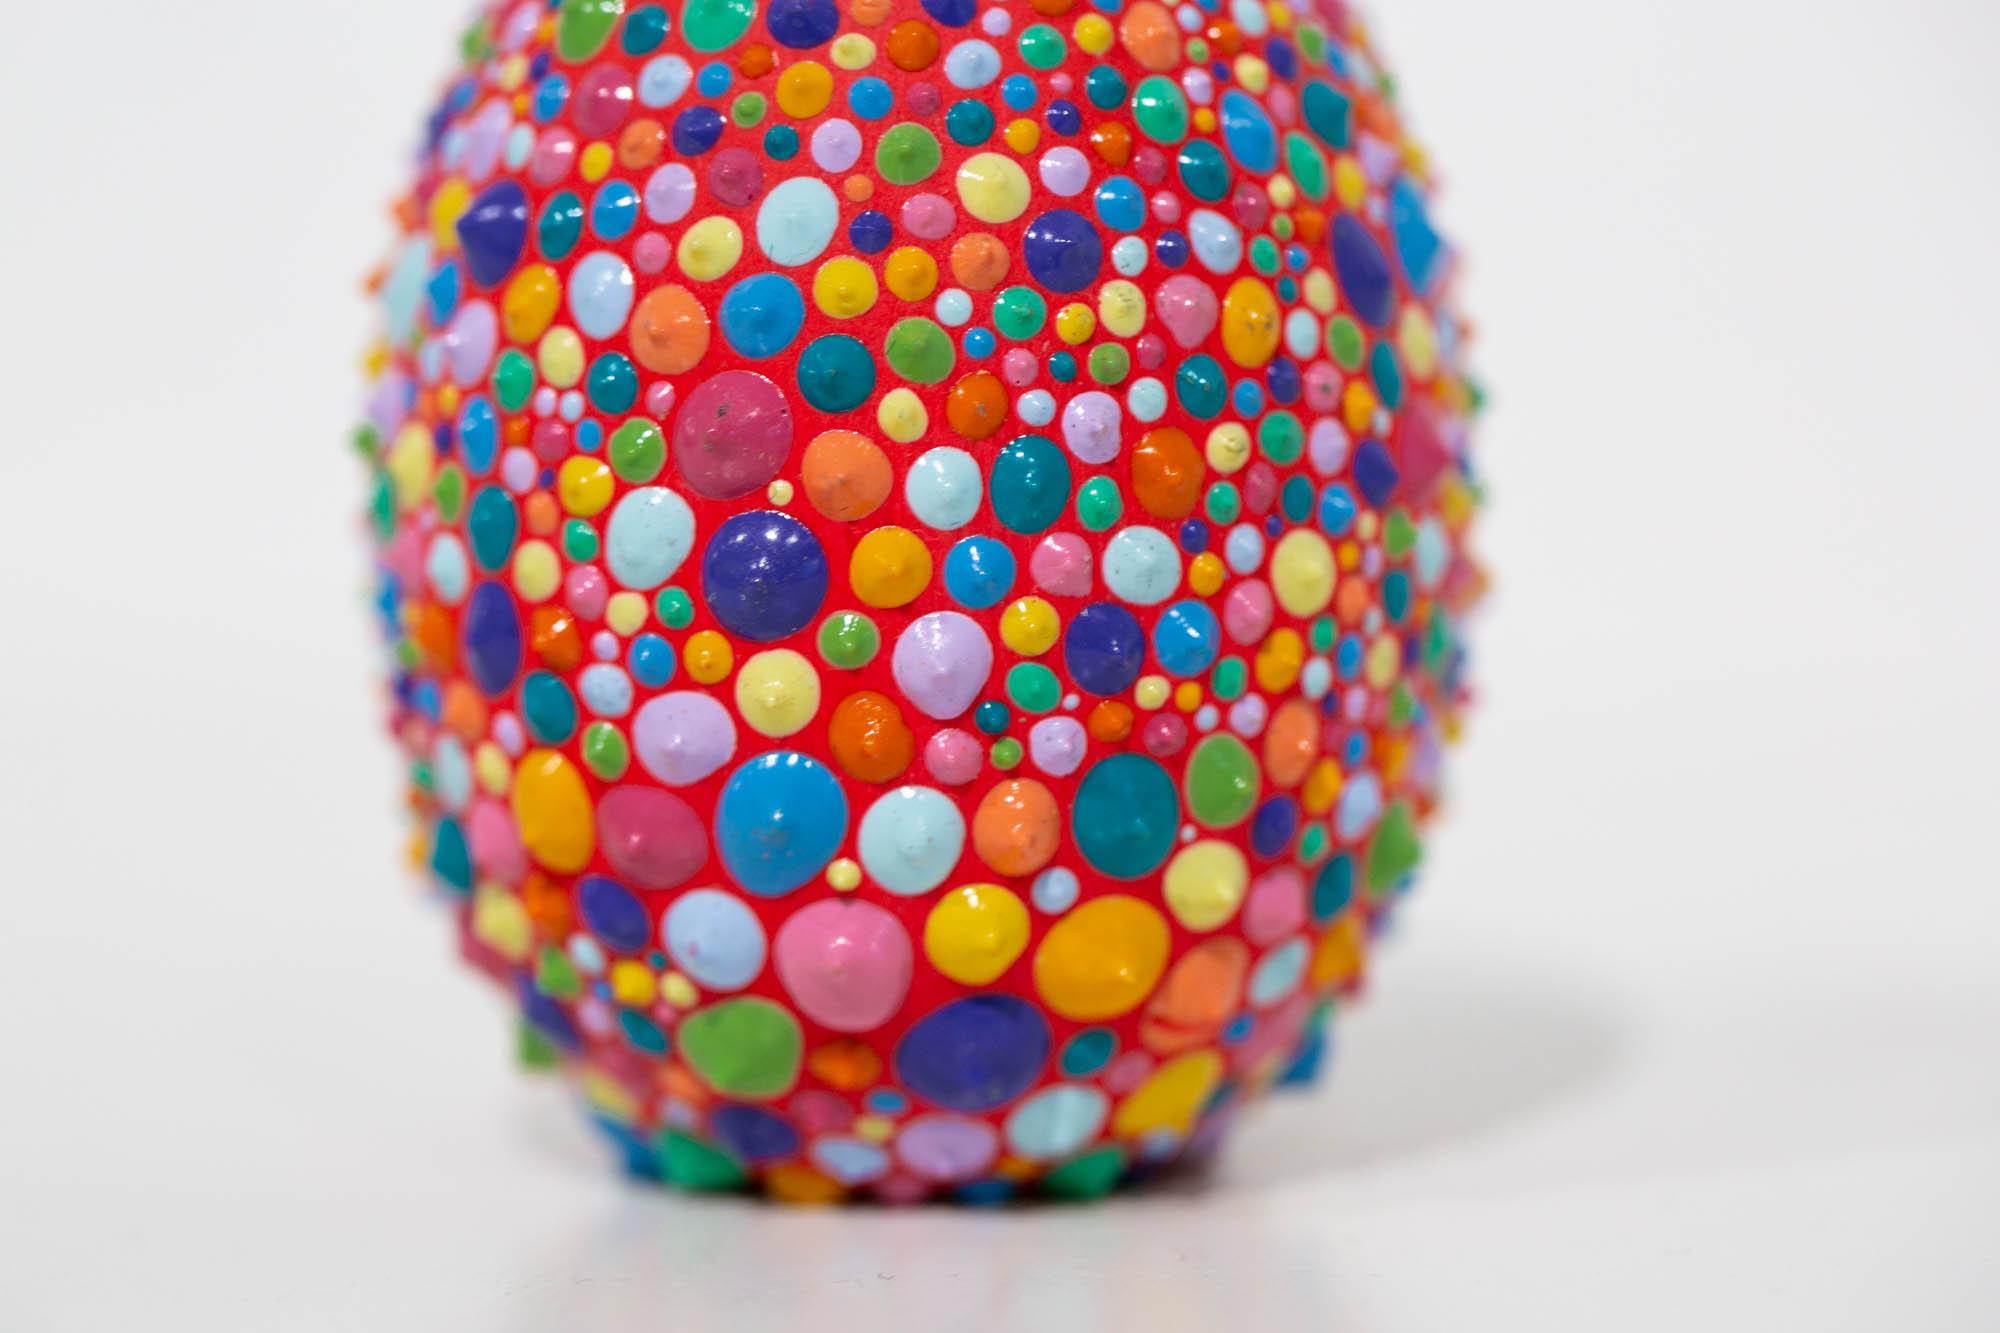 Confetti Control Egg - Sculpture by PJ Linden